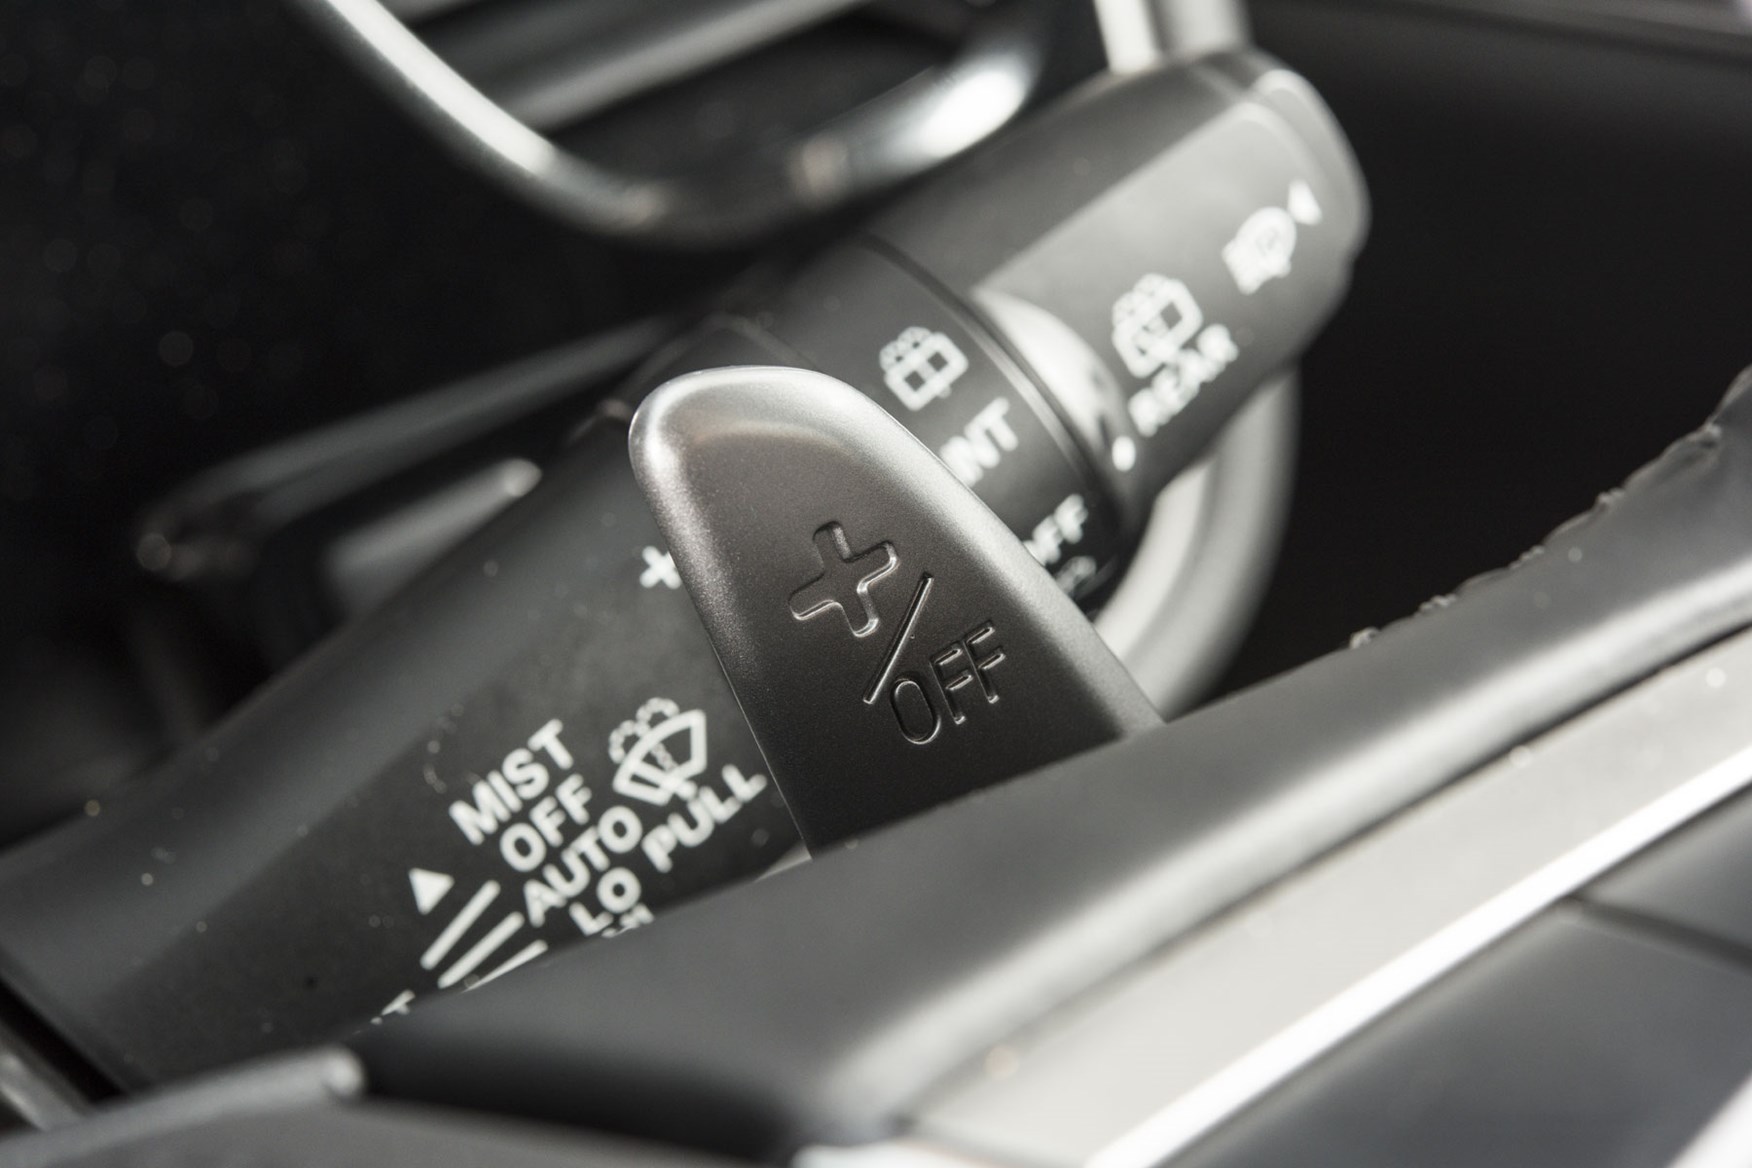 Mitsubishi Outlander Commercial 4x4 van review - 2019 PHEV paddleshifters braking function